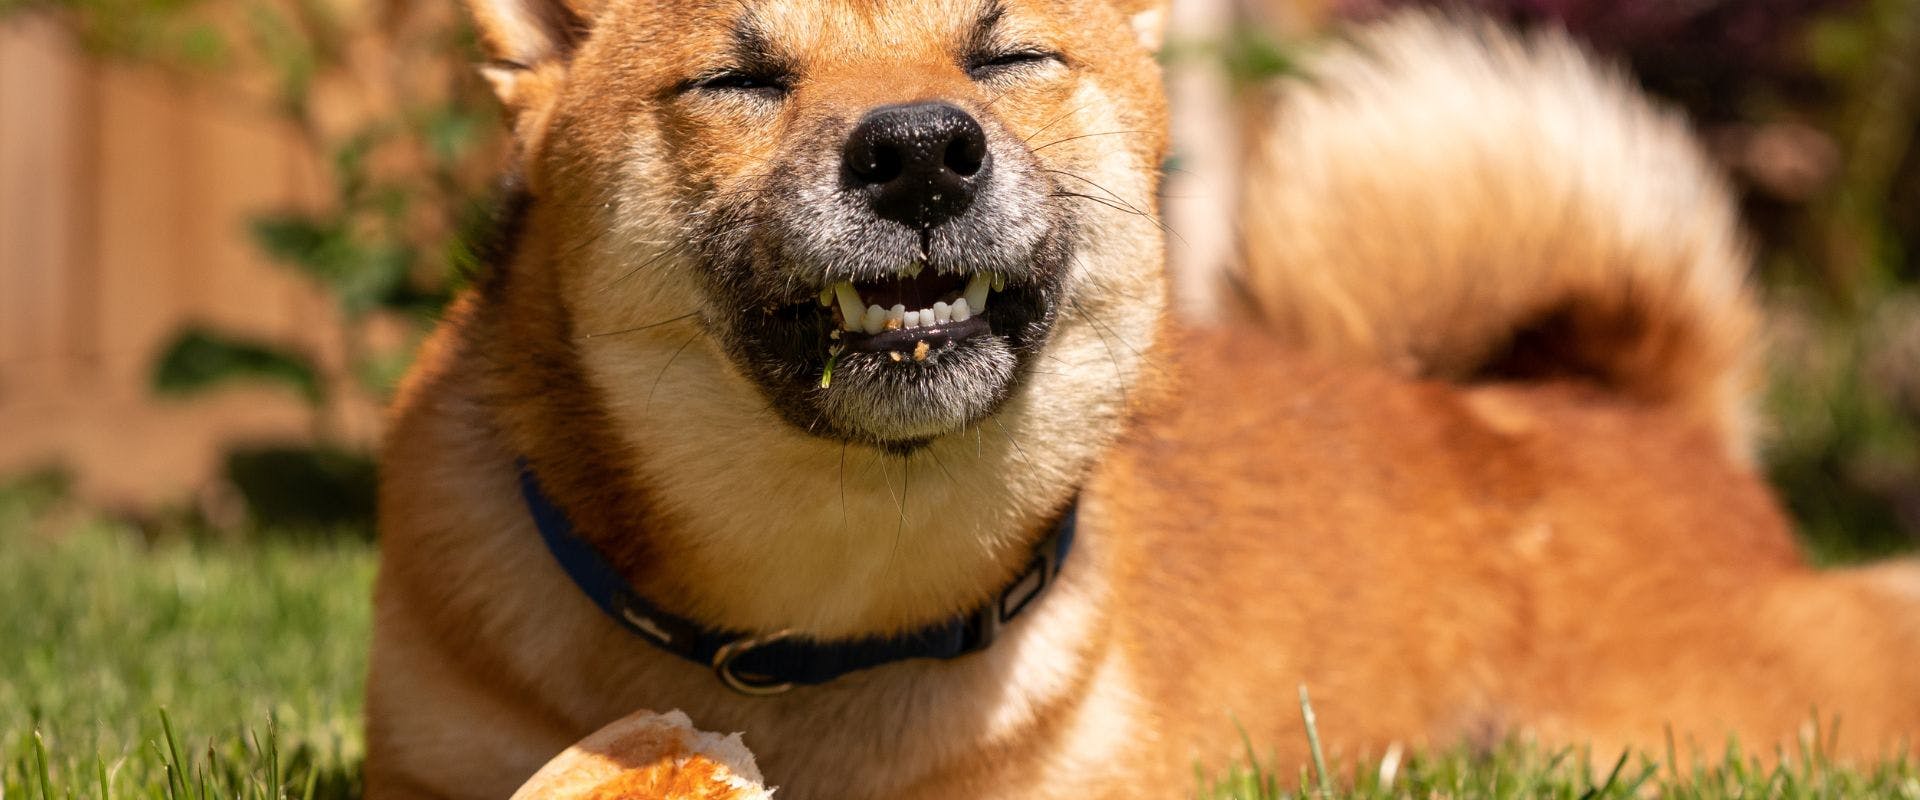 Beige dog eating wheat bread